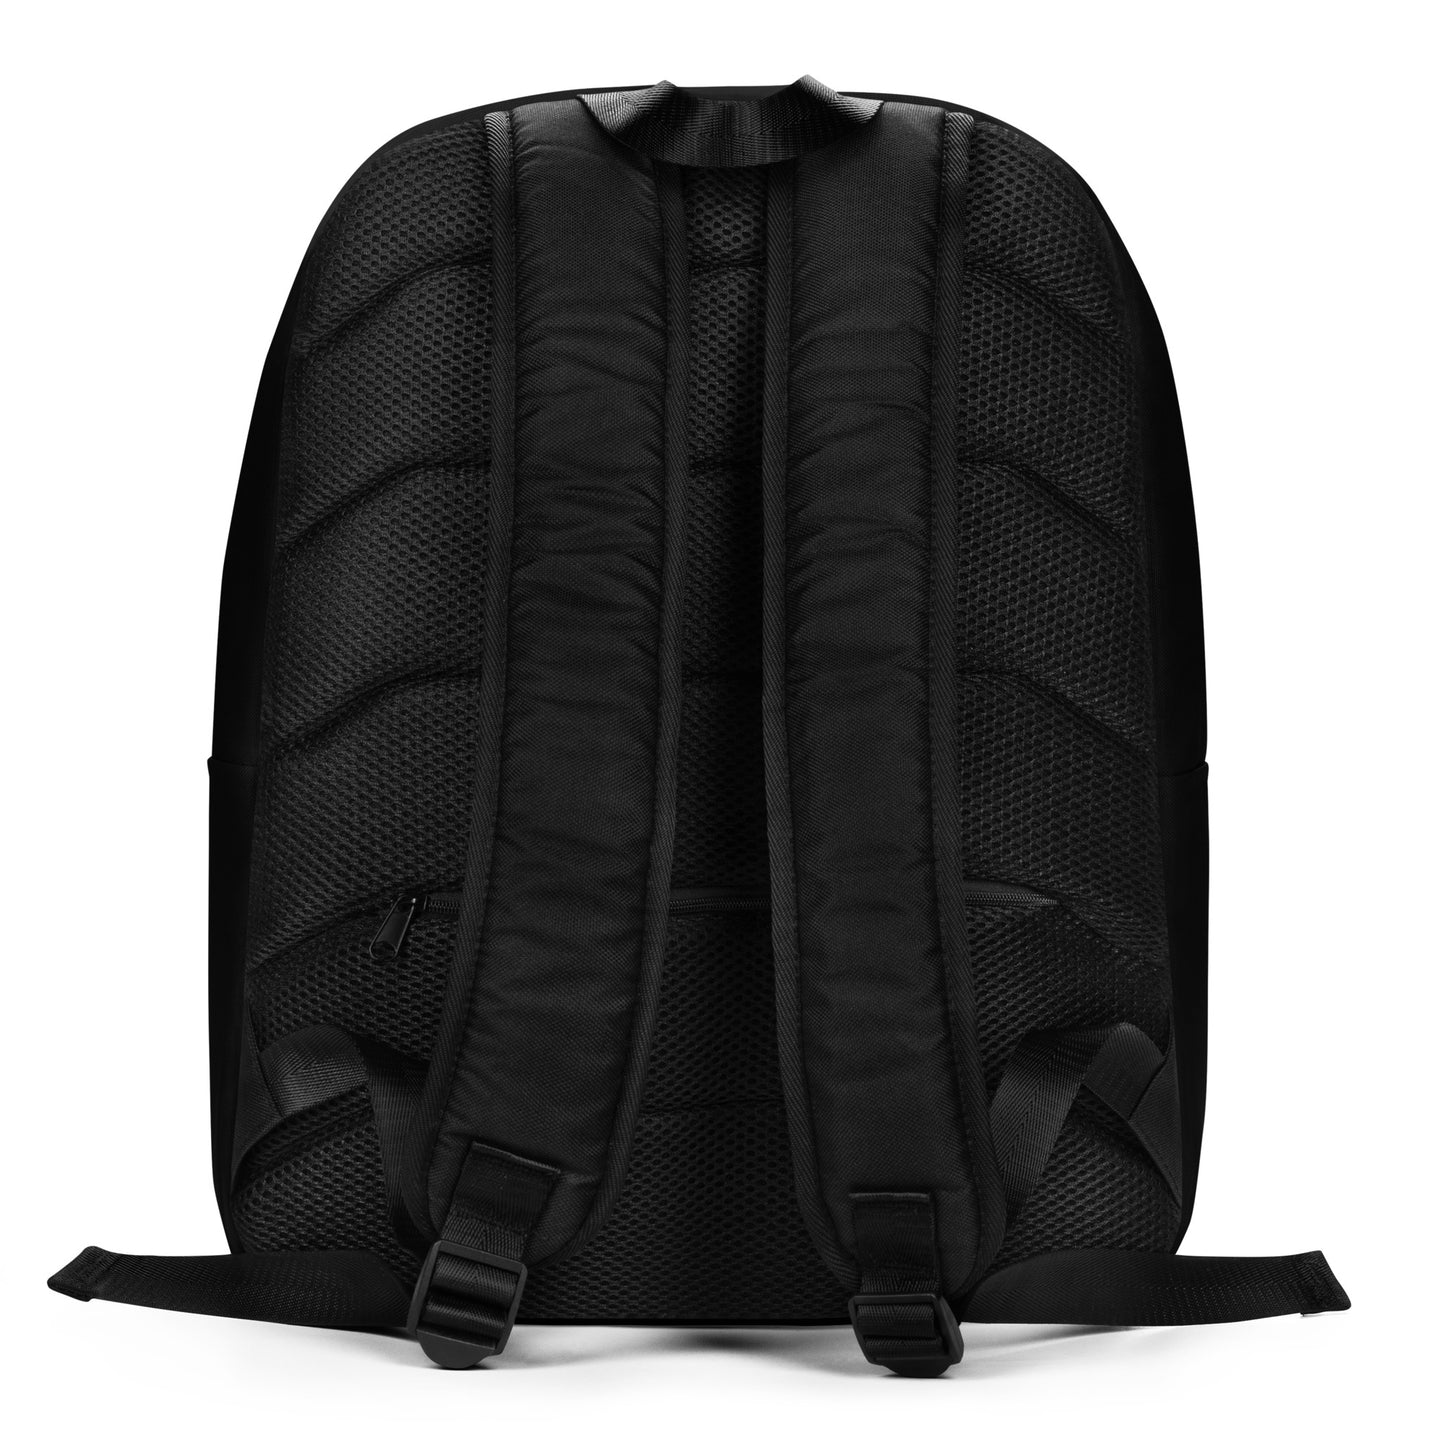 Brogrammer Backpack